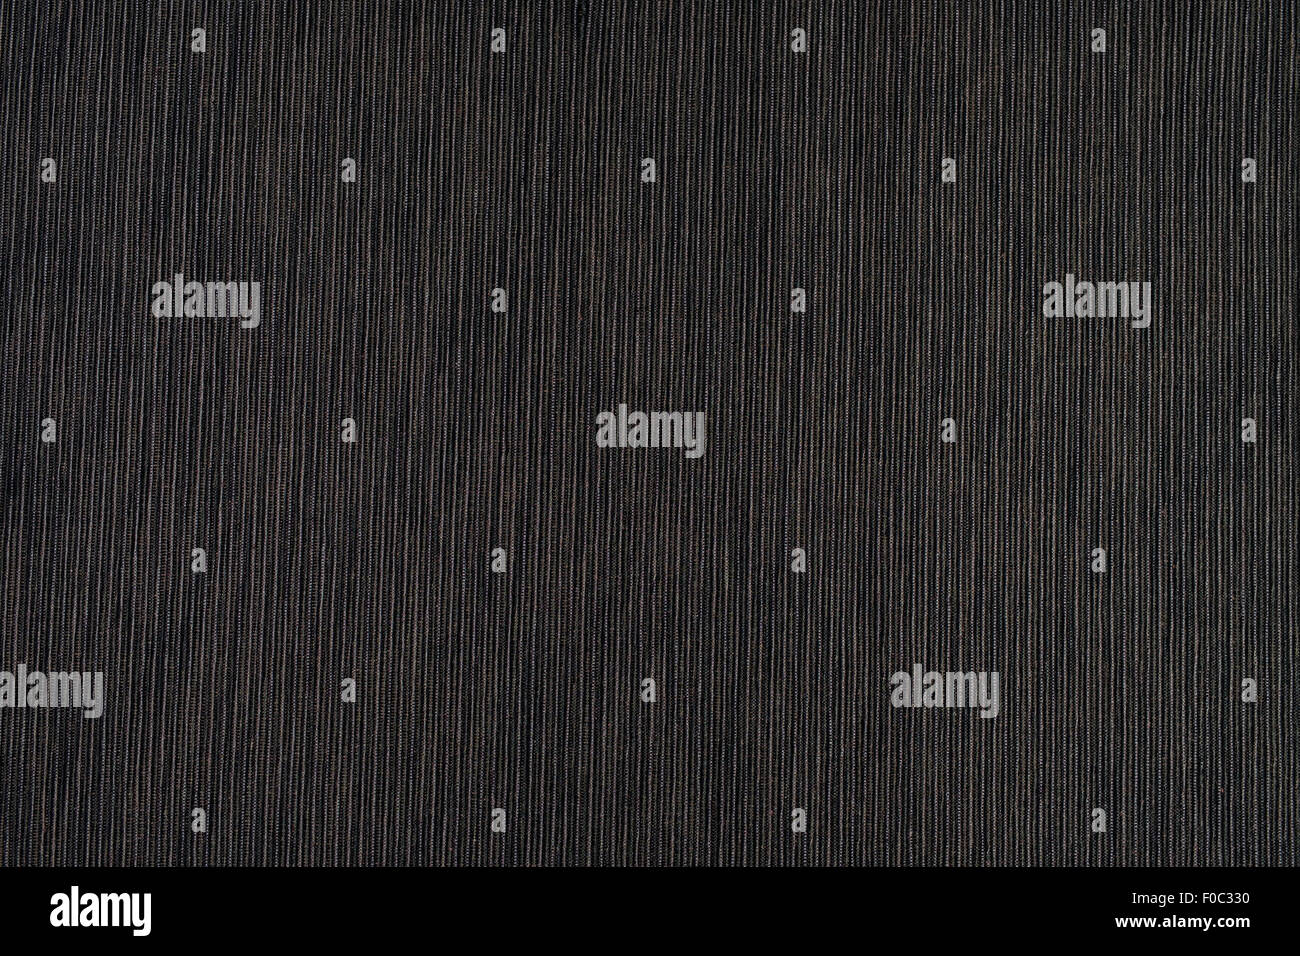 Dark woven cotton fabric texture background Stock Photo - Alamy